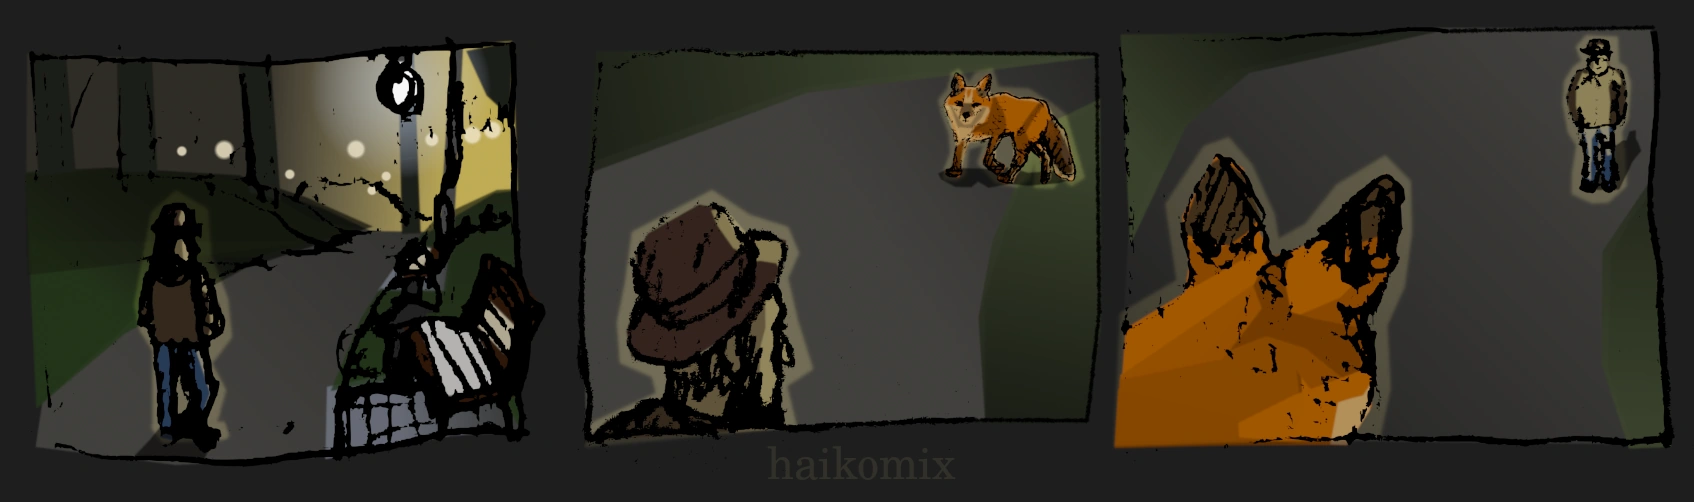 Short haiku-style comic about a fox